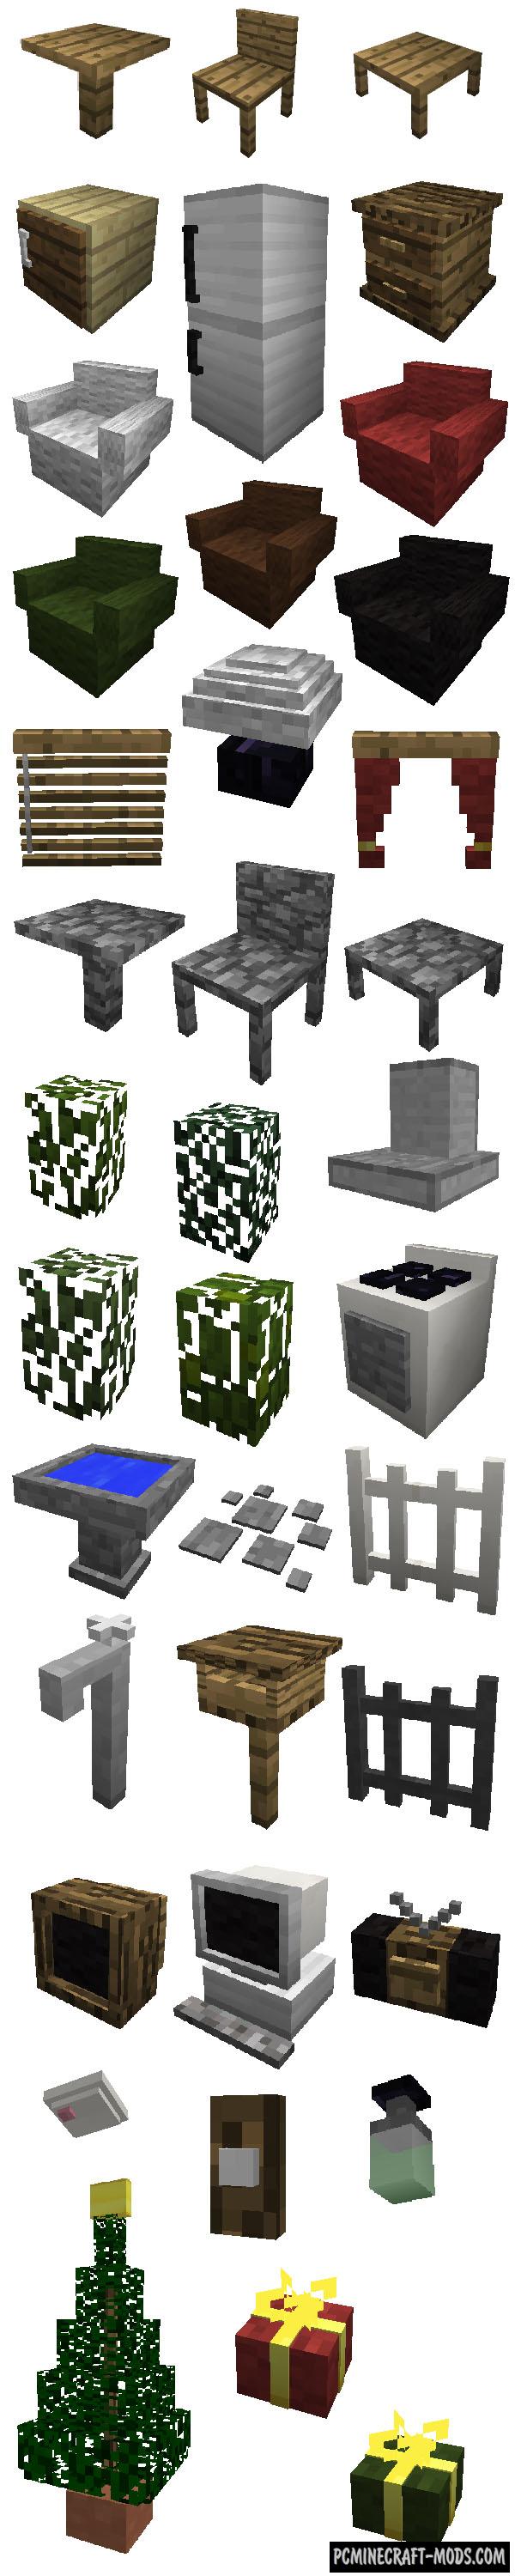 MrCrayfish's Furniture - Decor Mod For Minecraft 1.17.1, 1.16.5, 1.12.2